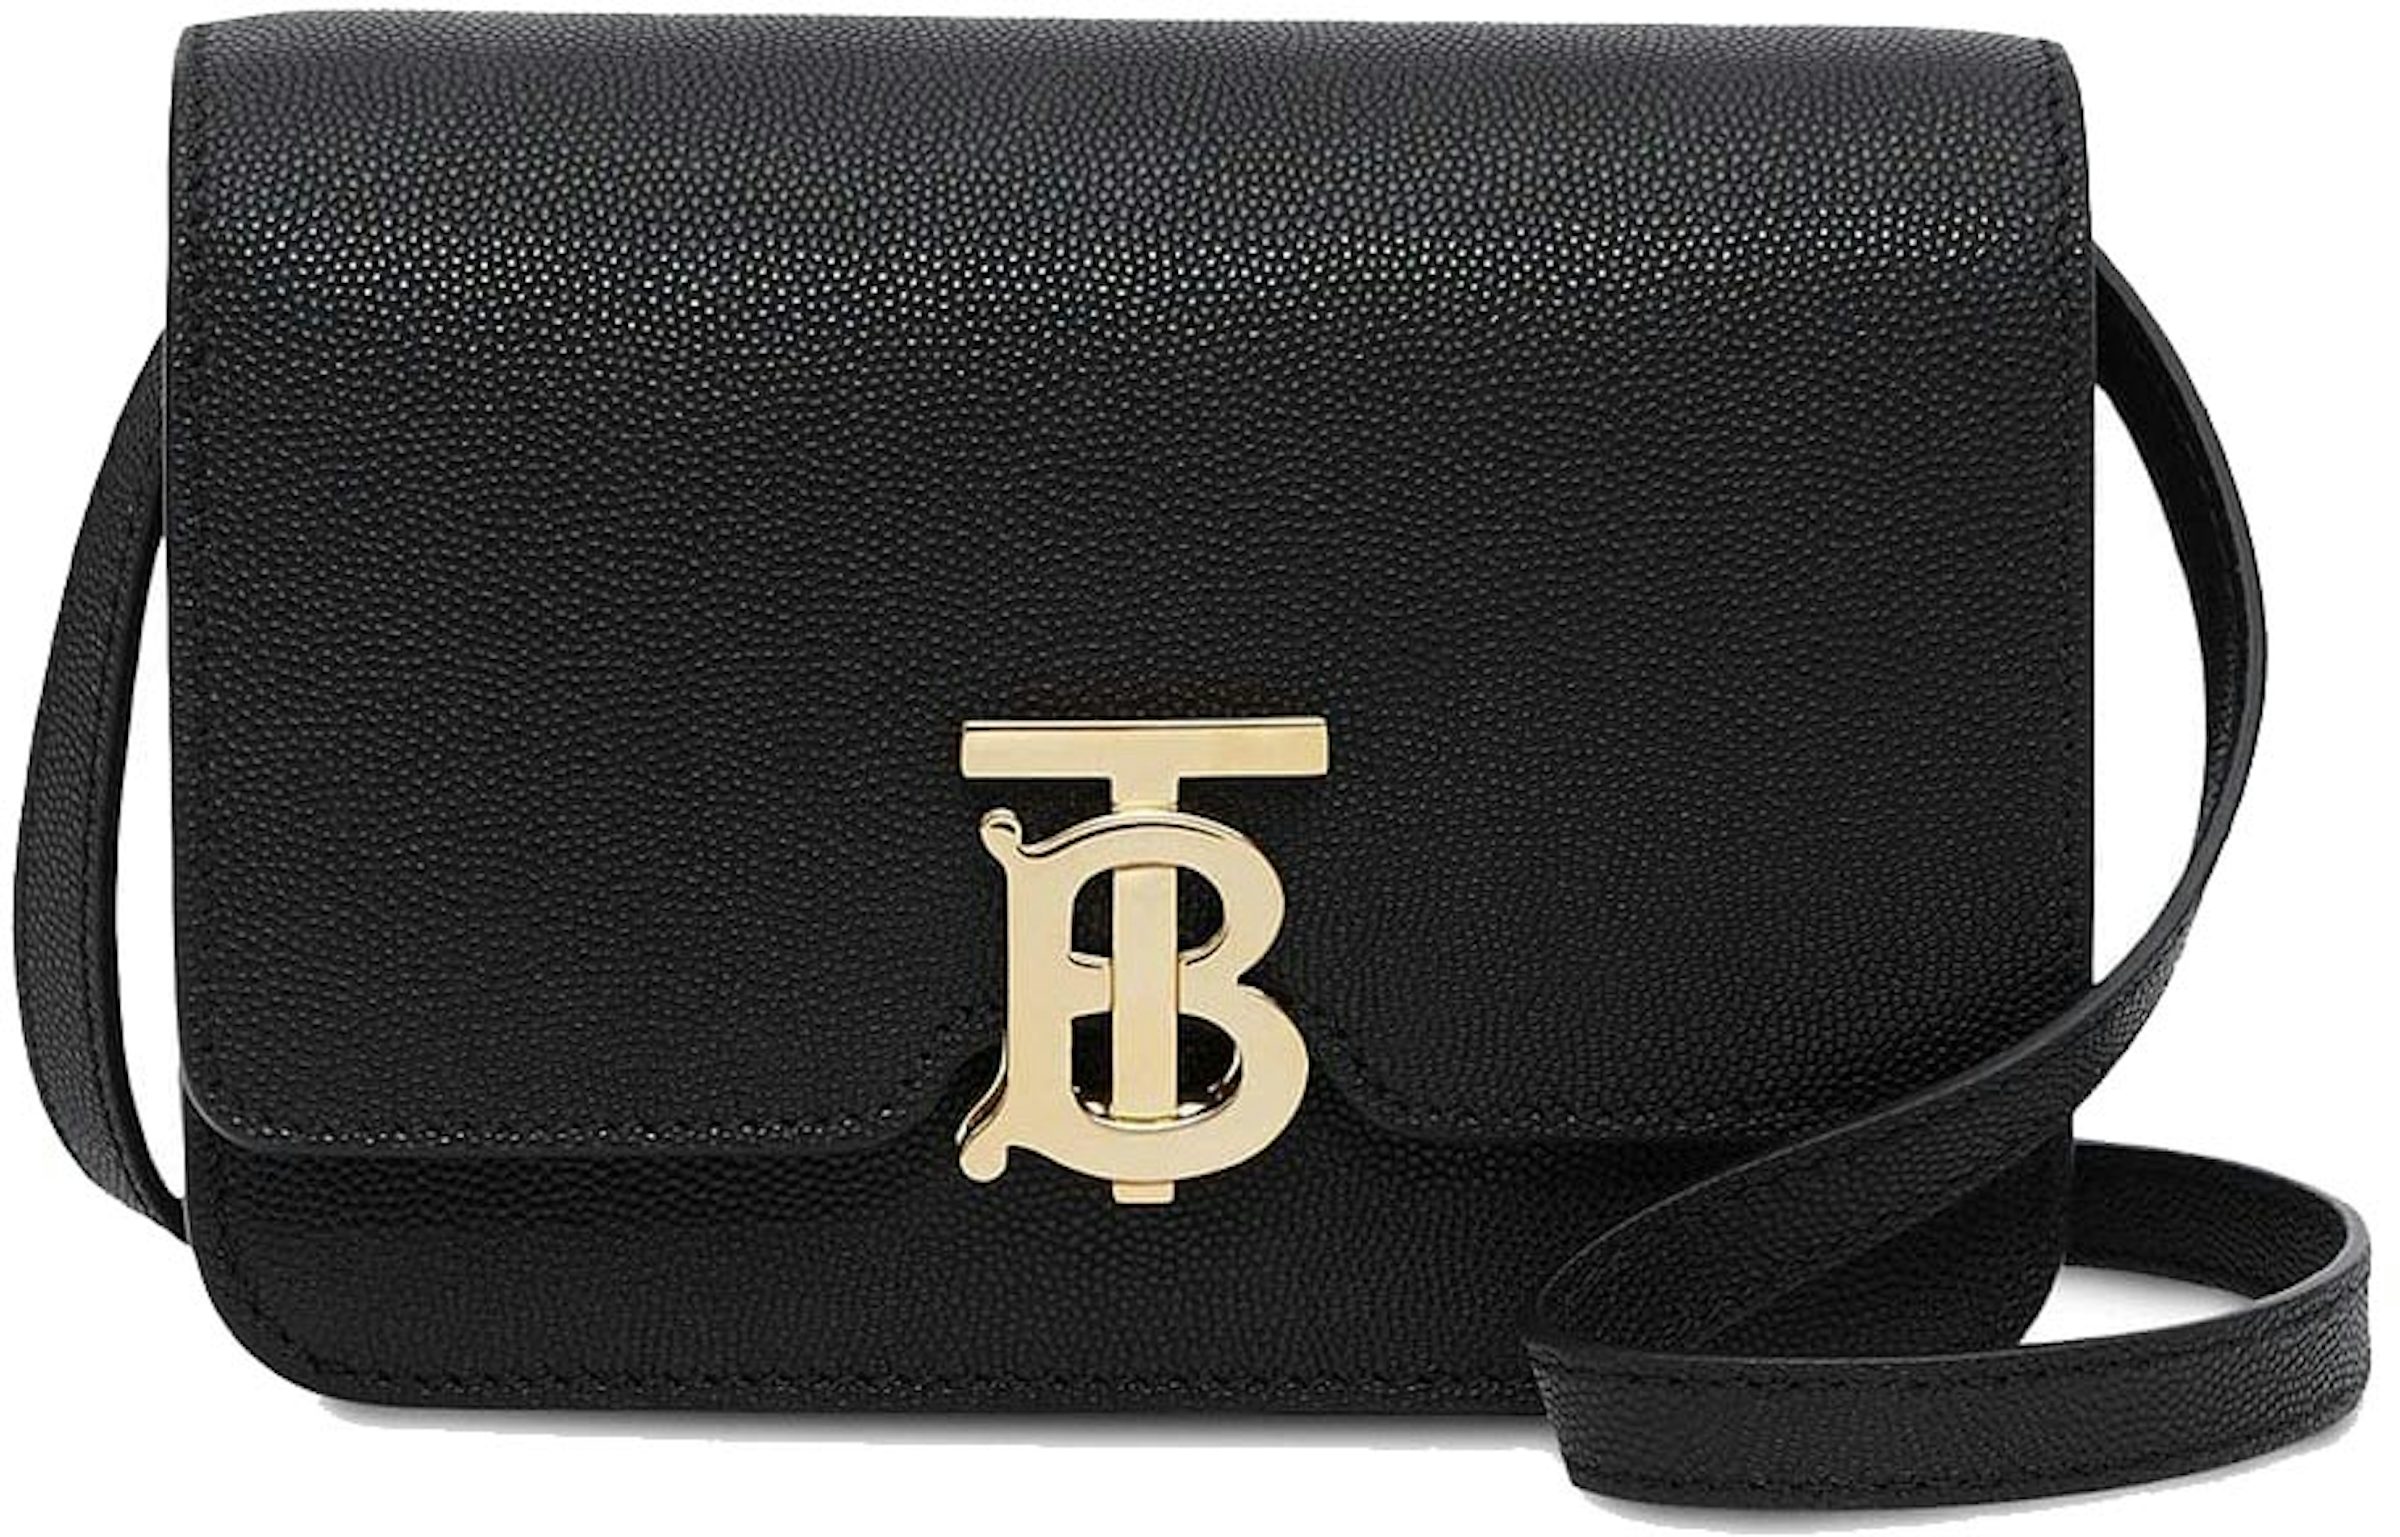 BURBERRY TB Monogram Mini Leather Shoulder Bag Beige - Final Sale